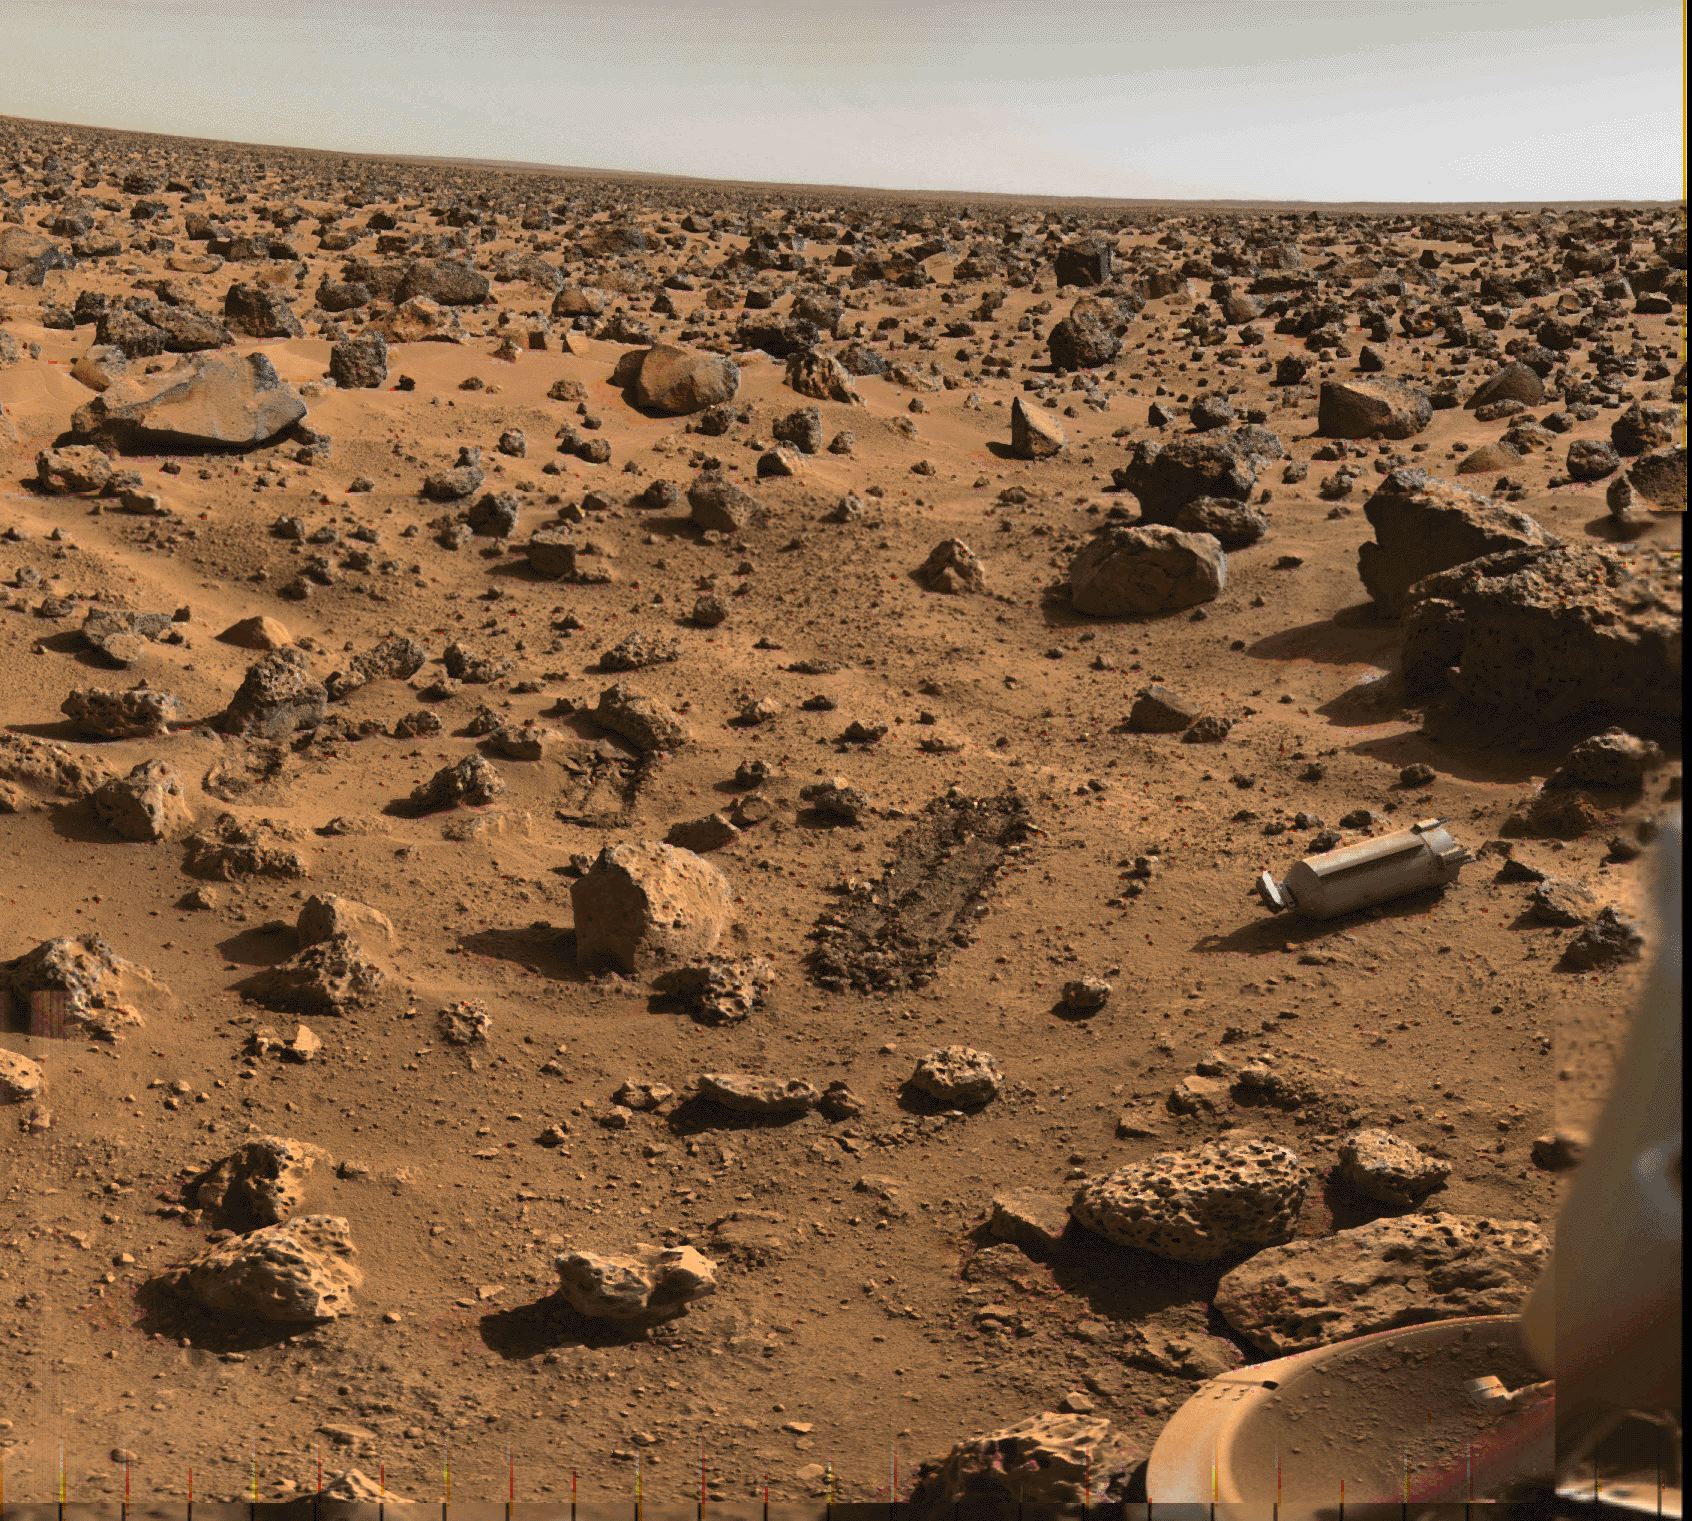 Viking Panorama Of The Martian Surface